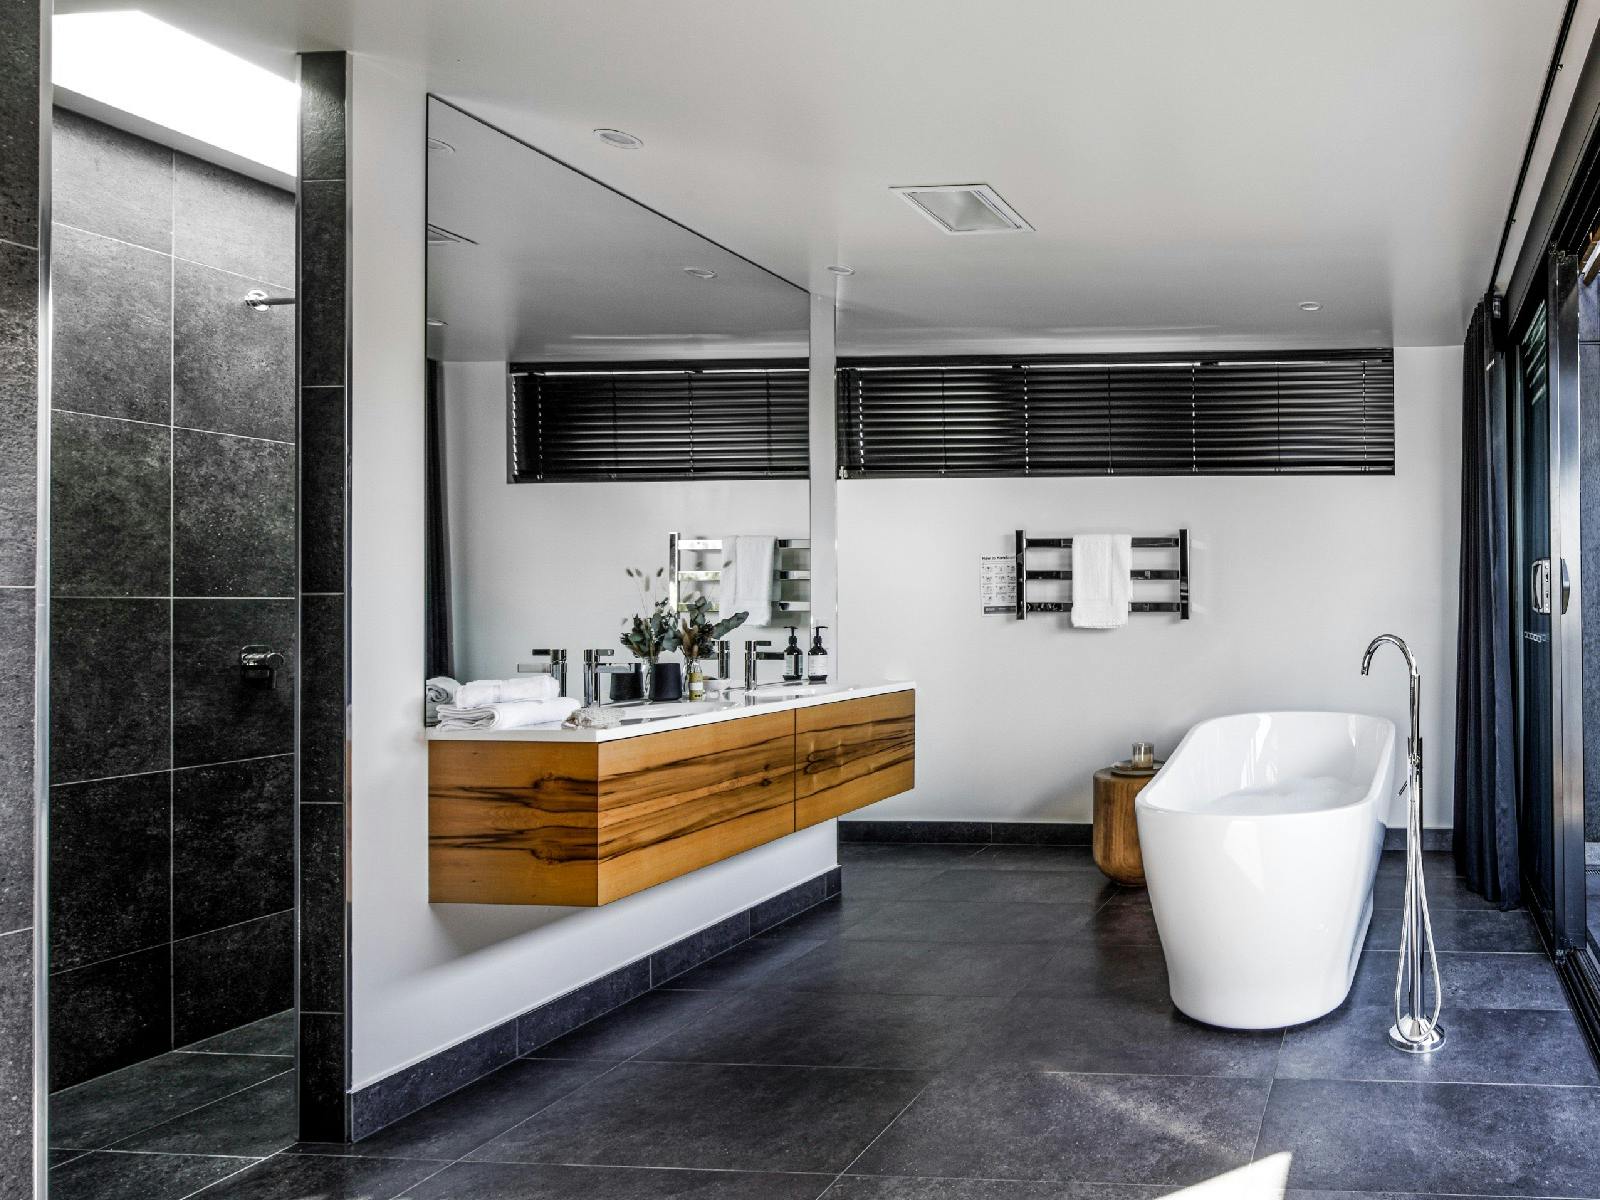 The second bedroom ensuite features a freestanding bath, double rain head showers.